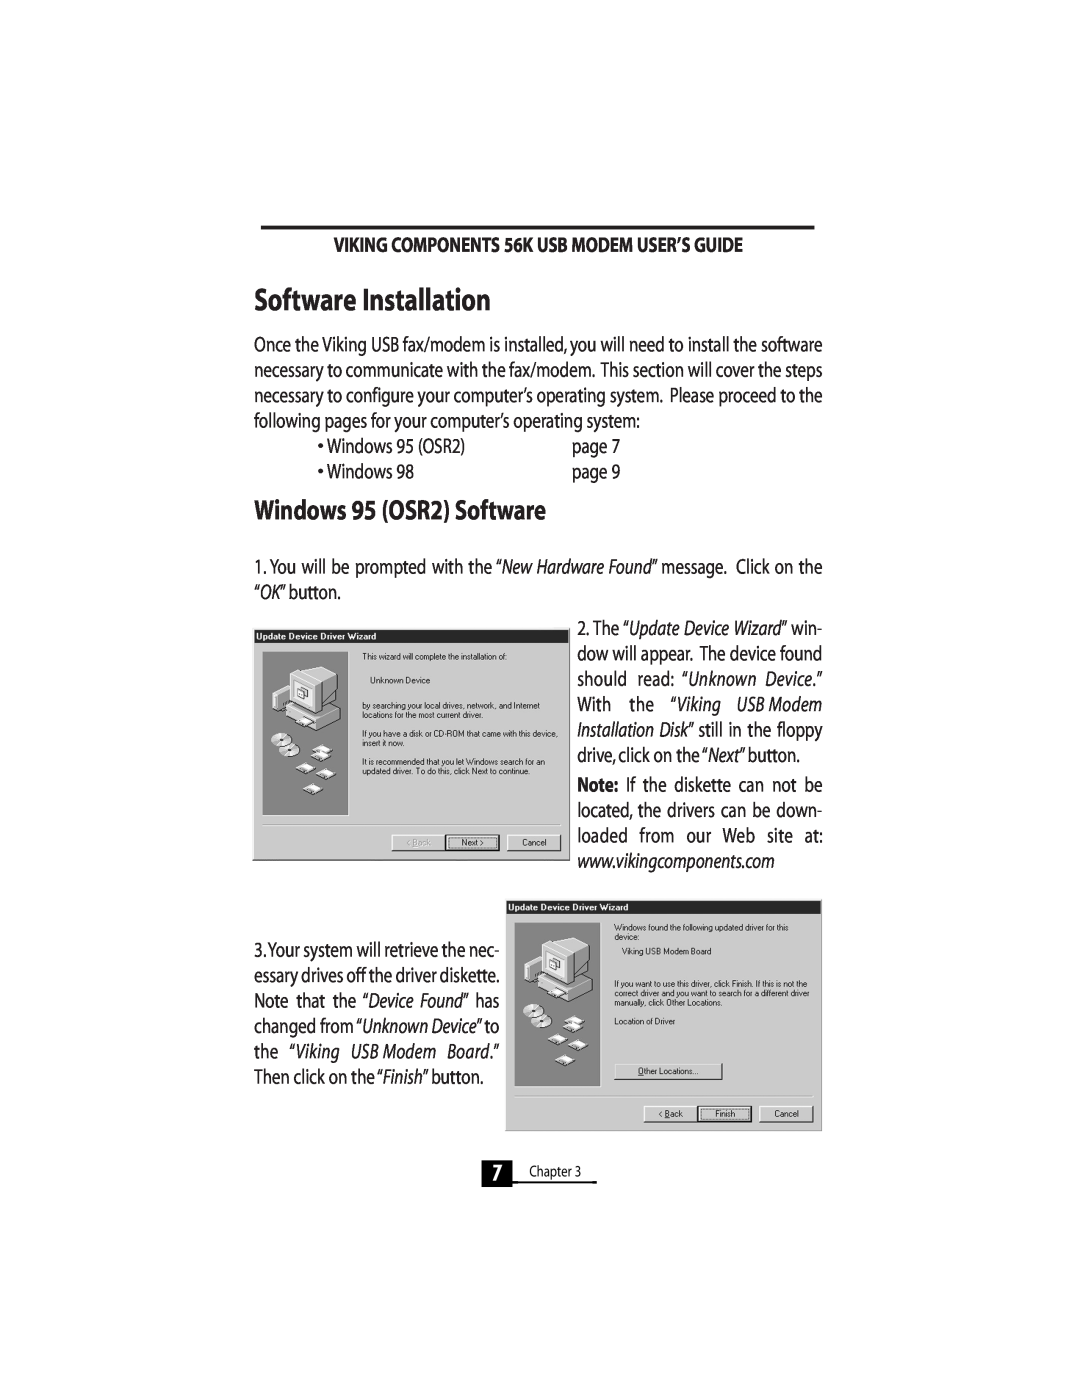 Viking InterWorks 56K manual Software Installation, Windows 95 OSR2 Software 